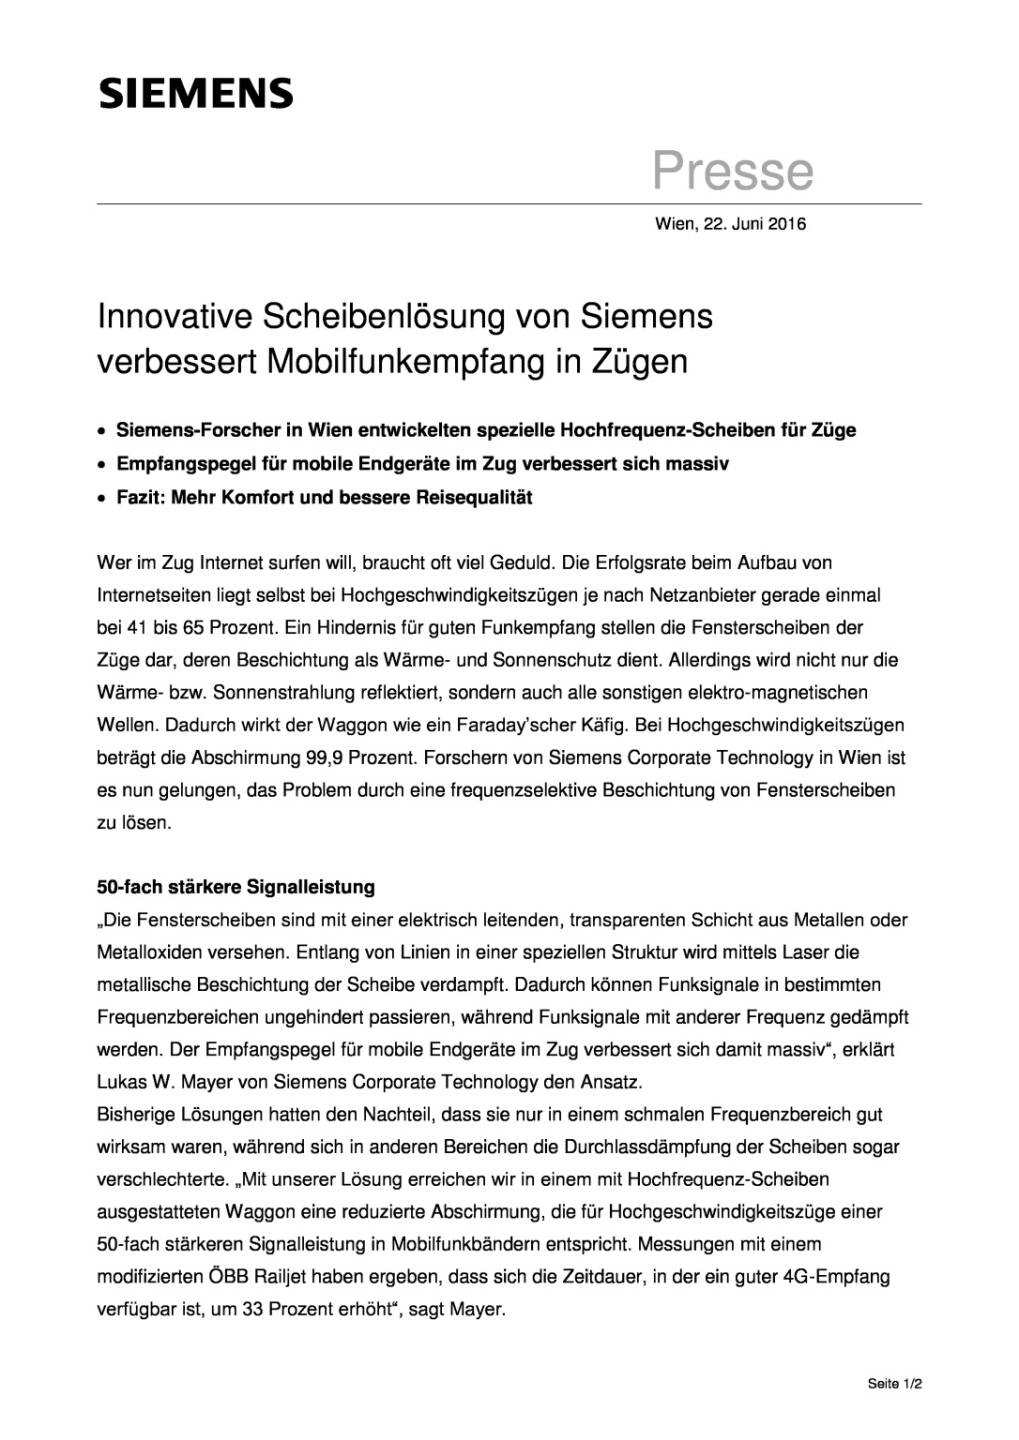 Siemens: Innovative Scheibenlösung verbessert Mobilfunkempfang in Zügen, Seite 1/2, komplettes Dokument unter http://boerse-social.com/static/uploads/file_1251_siemens_innovative_scheibenlosung_verbessert_mobilfunkempfang_in_zugen.pdf